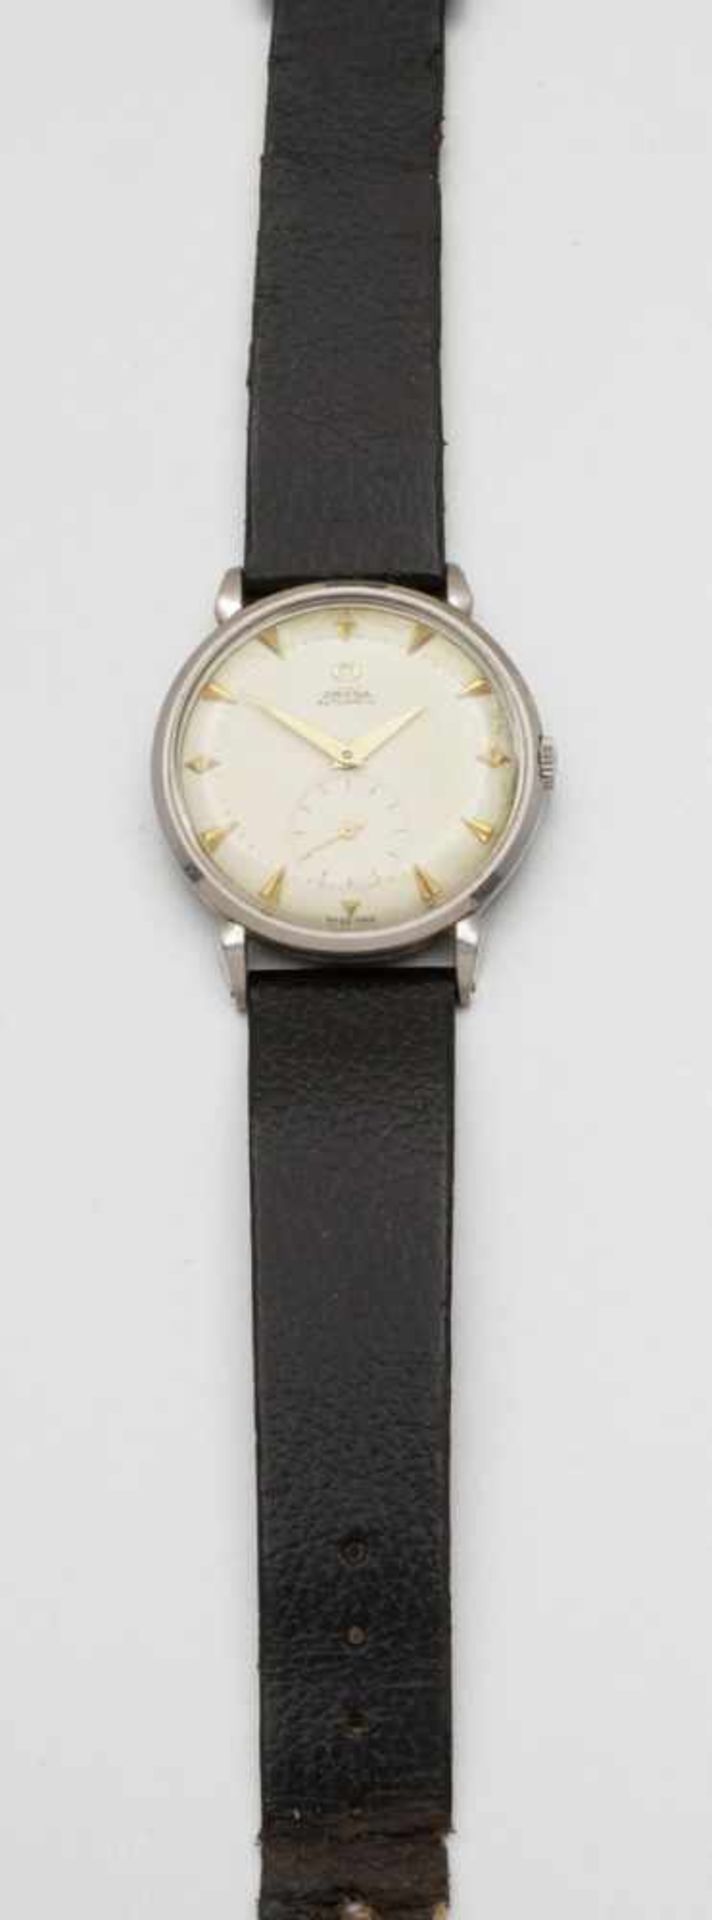 Omega-Herrenarmbanduhr um 1952Fa. Omega Watch & Co., Schweiz. Modell: Seamaster Bumper Automatic. - Bild 2 aus 2